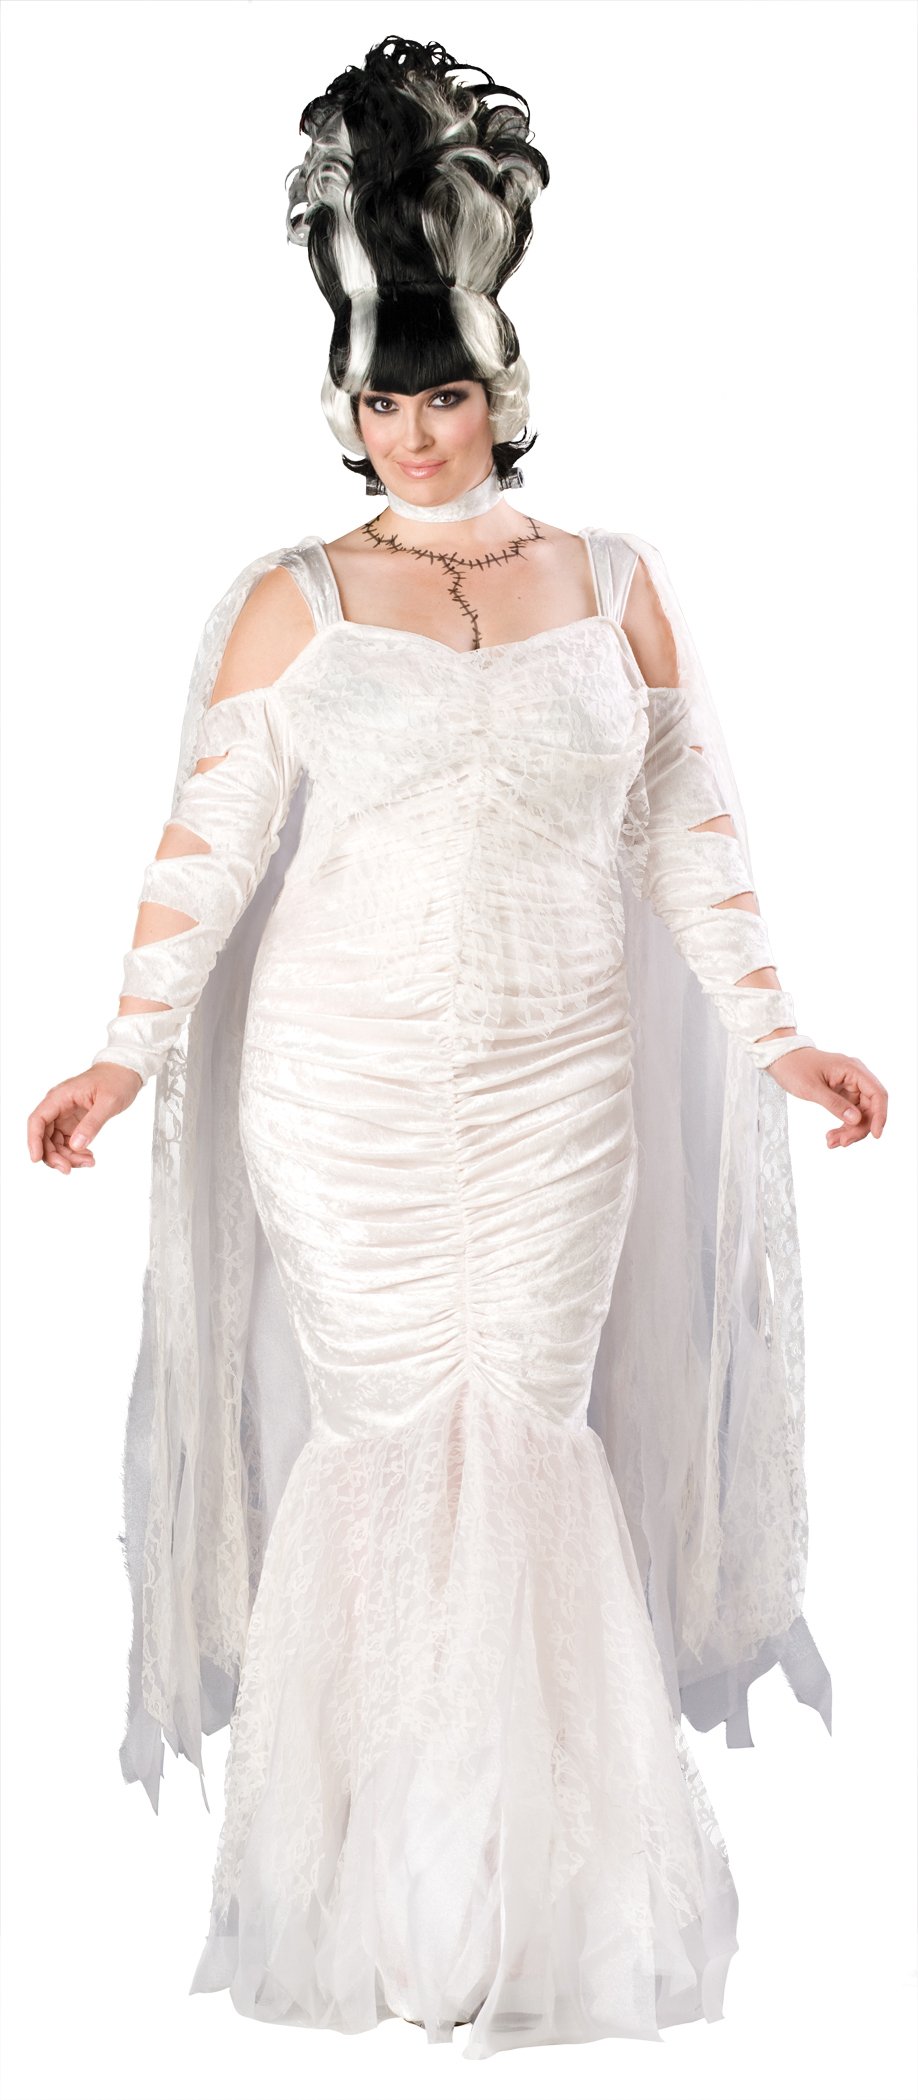 Bride Of Frankenstein Monster Elite Adult Plus Costume